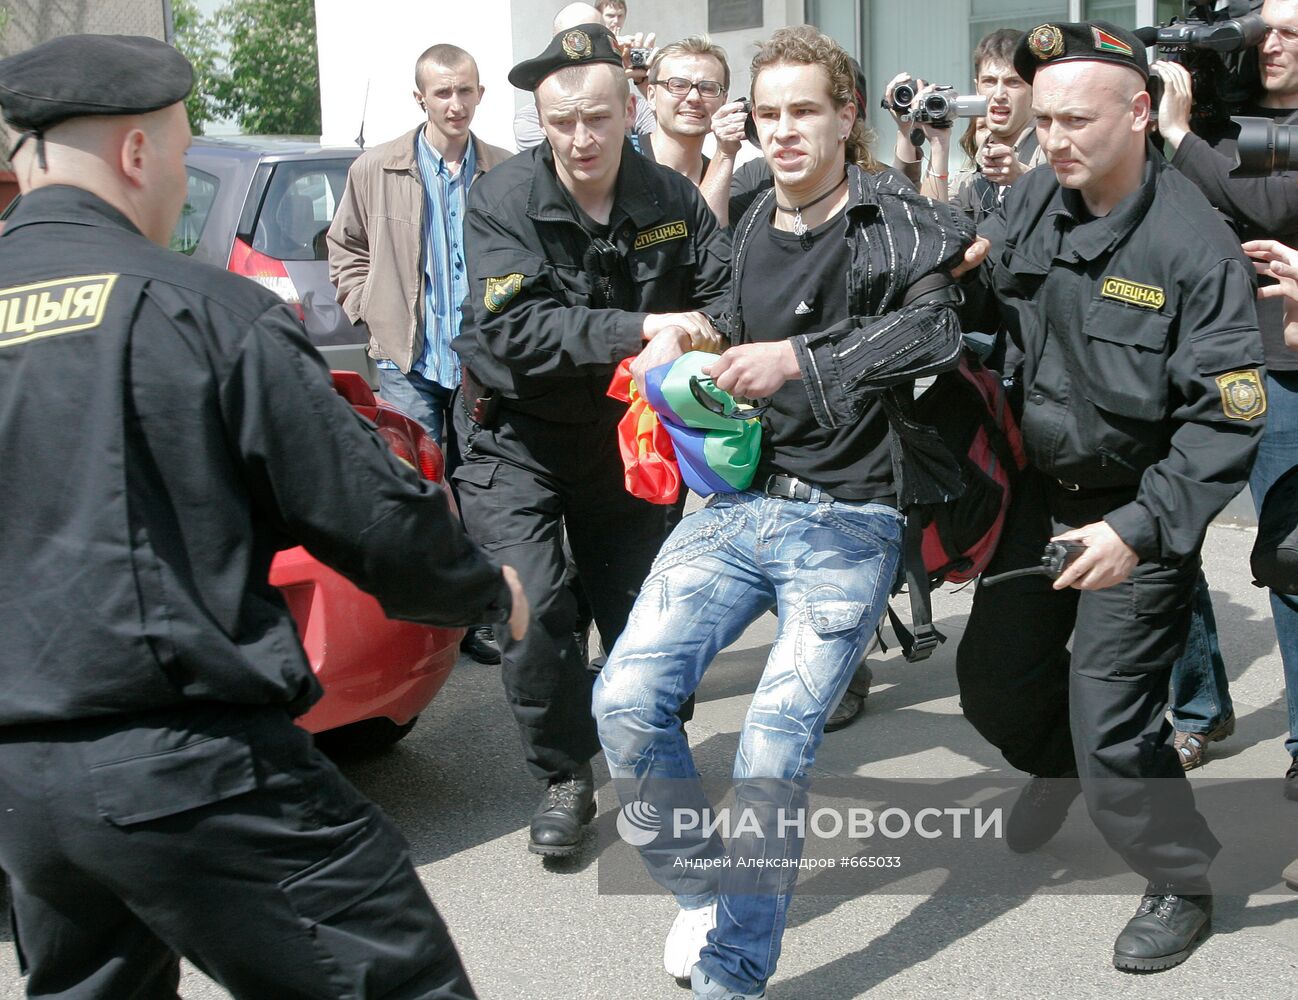 Разгон участников "Славянского гей-парада" в Минске